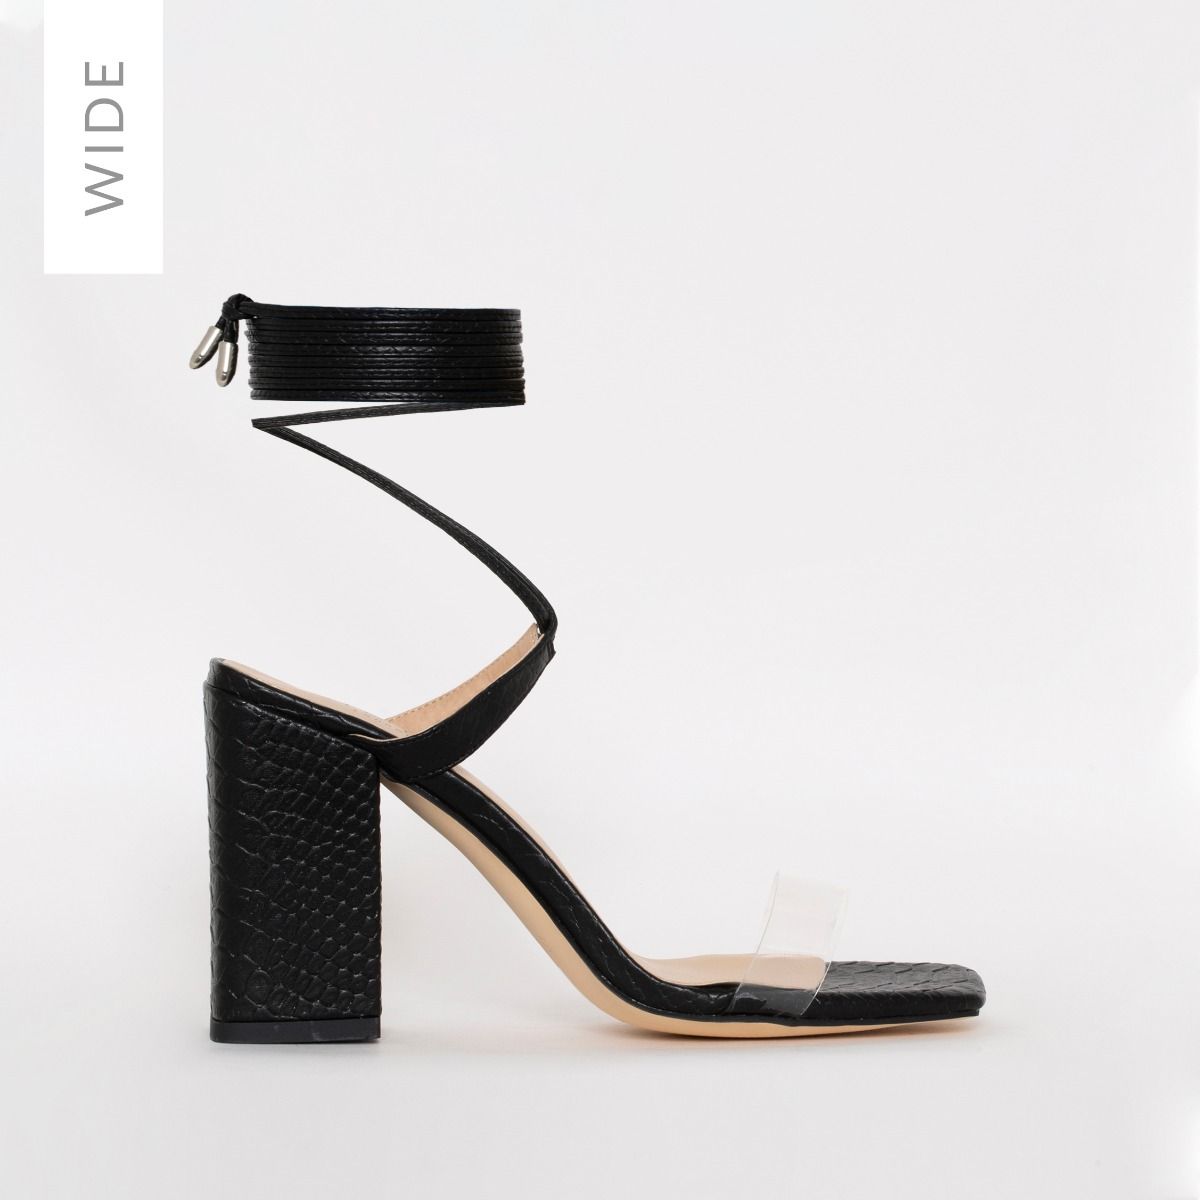 wide fit black patent heels